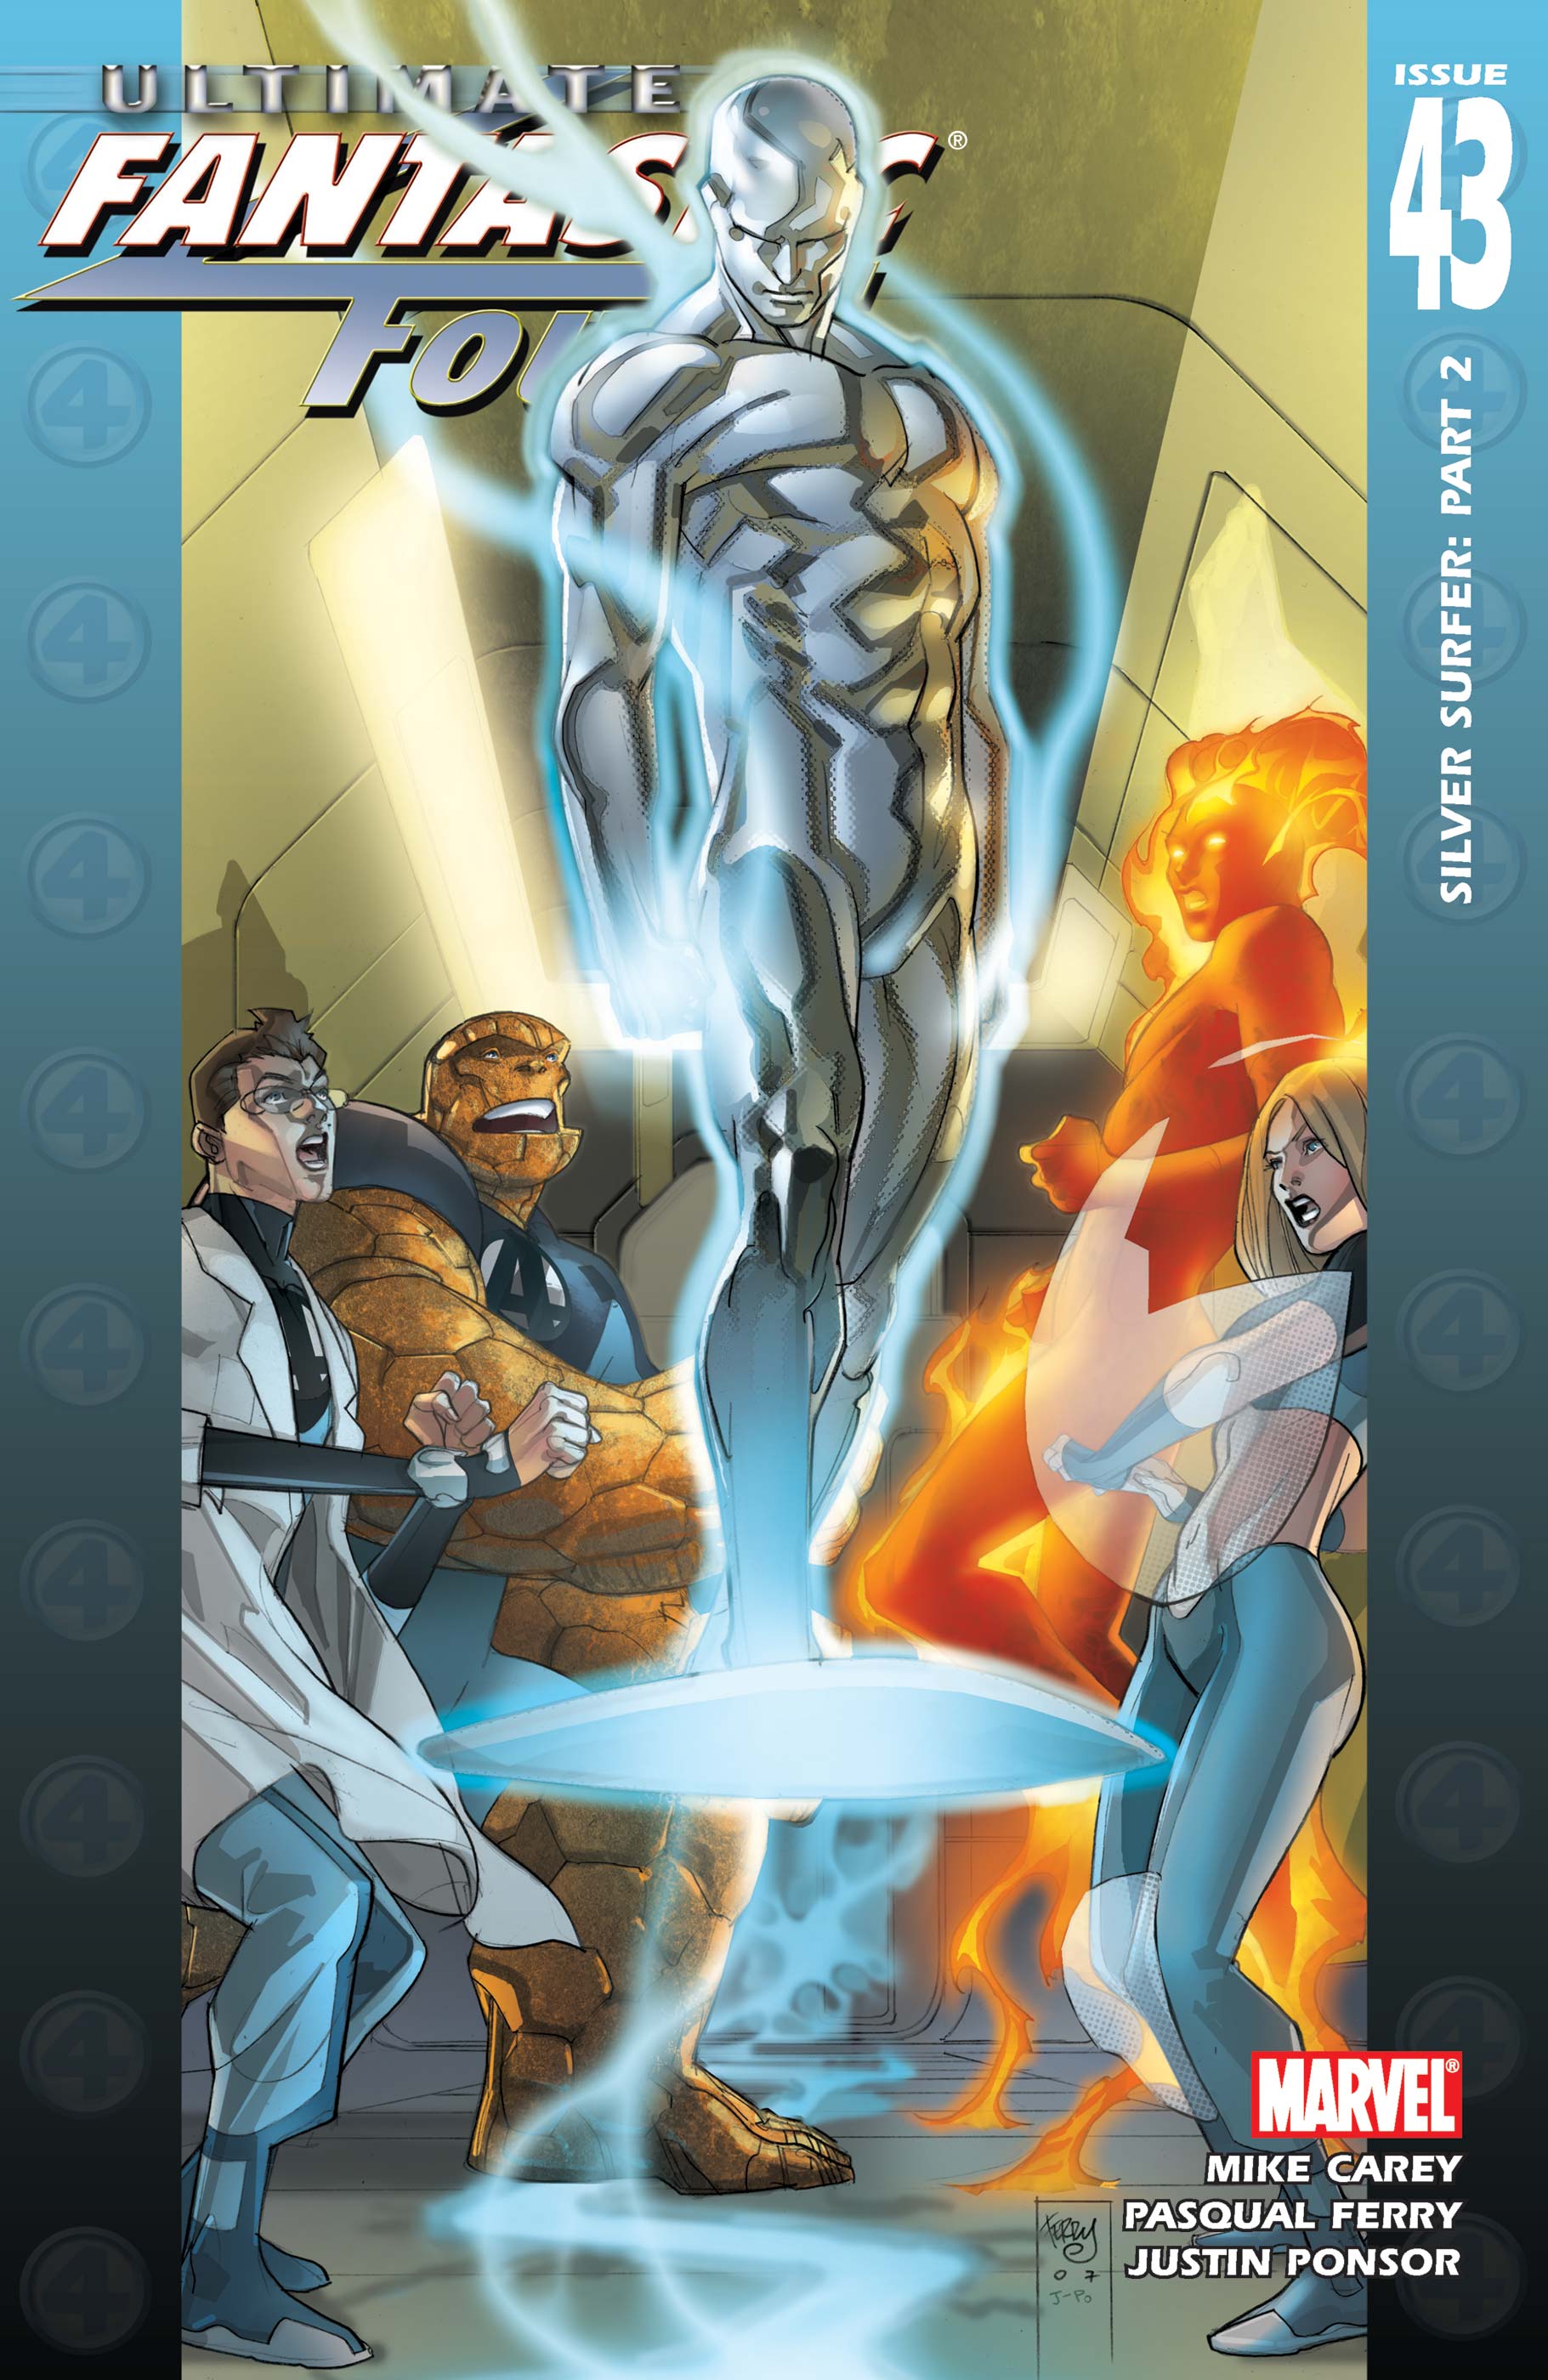 Ultimate Fantastic Four (2003) #43